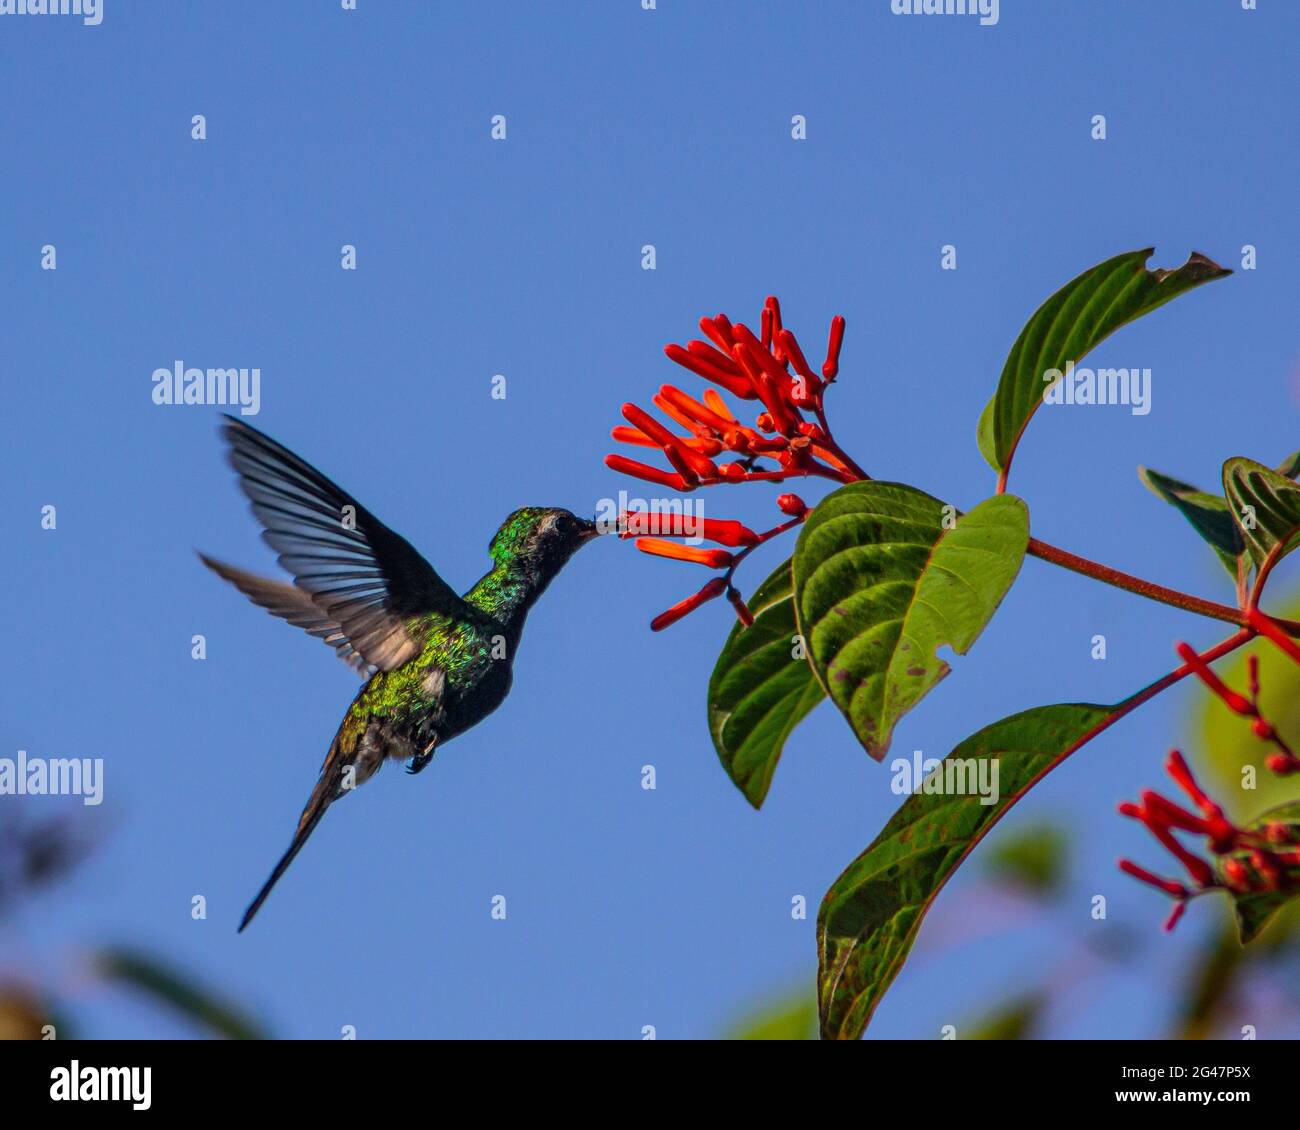 Closeup shot of a flying Sword-billed hummingbird approaching a flower Stock Photo